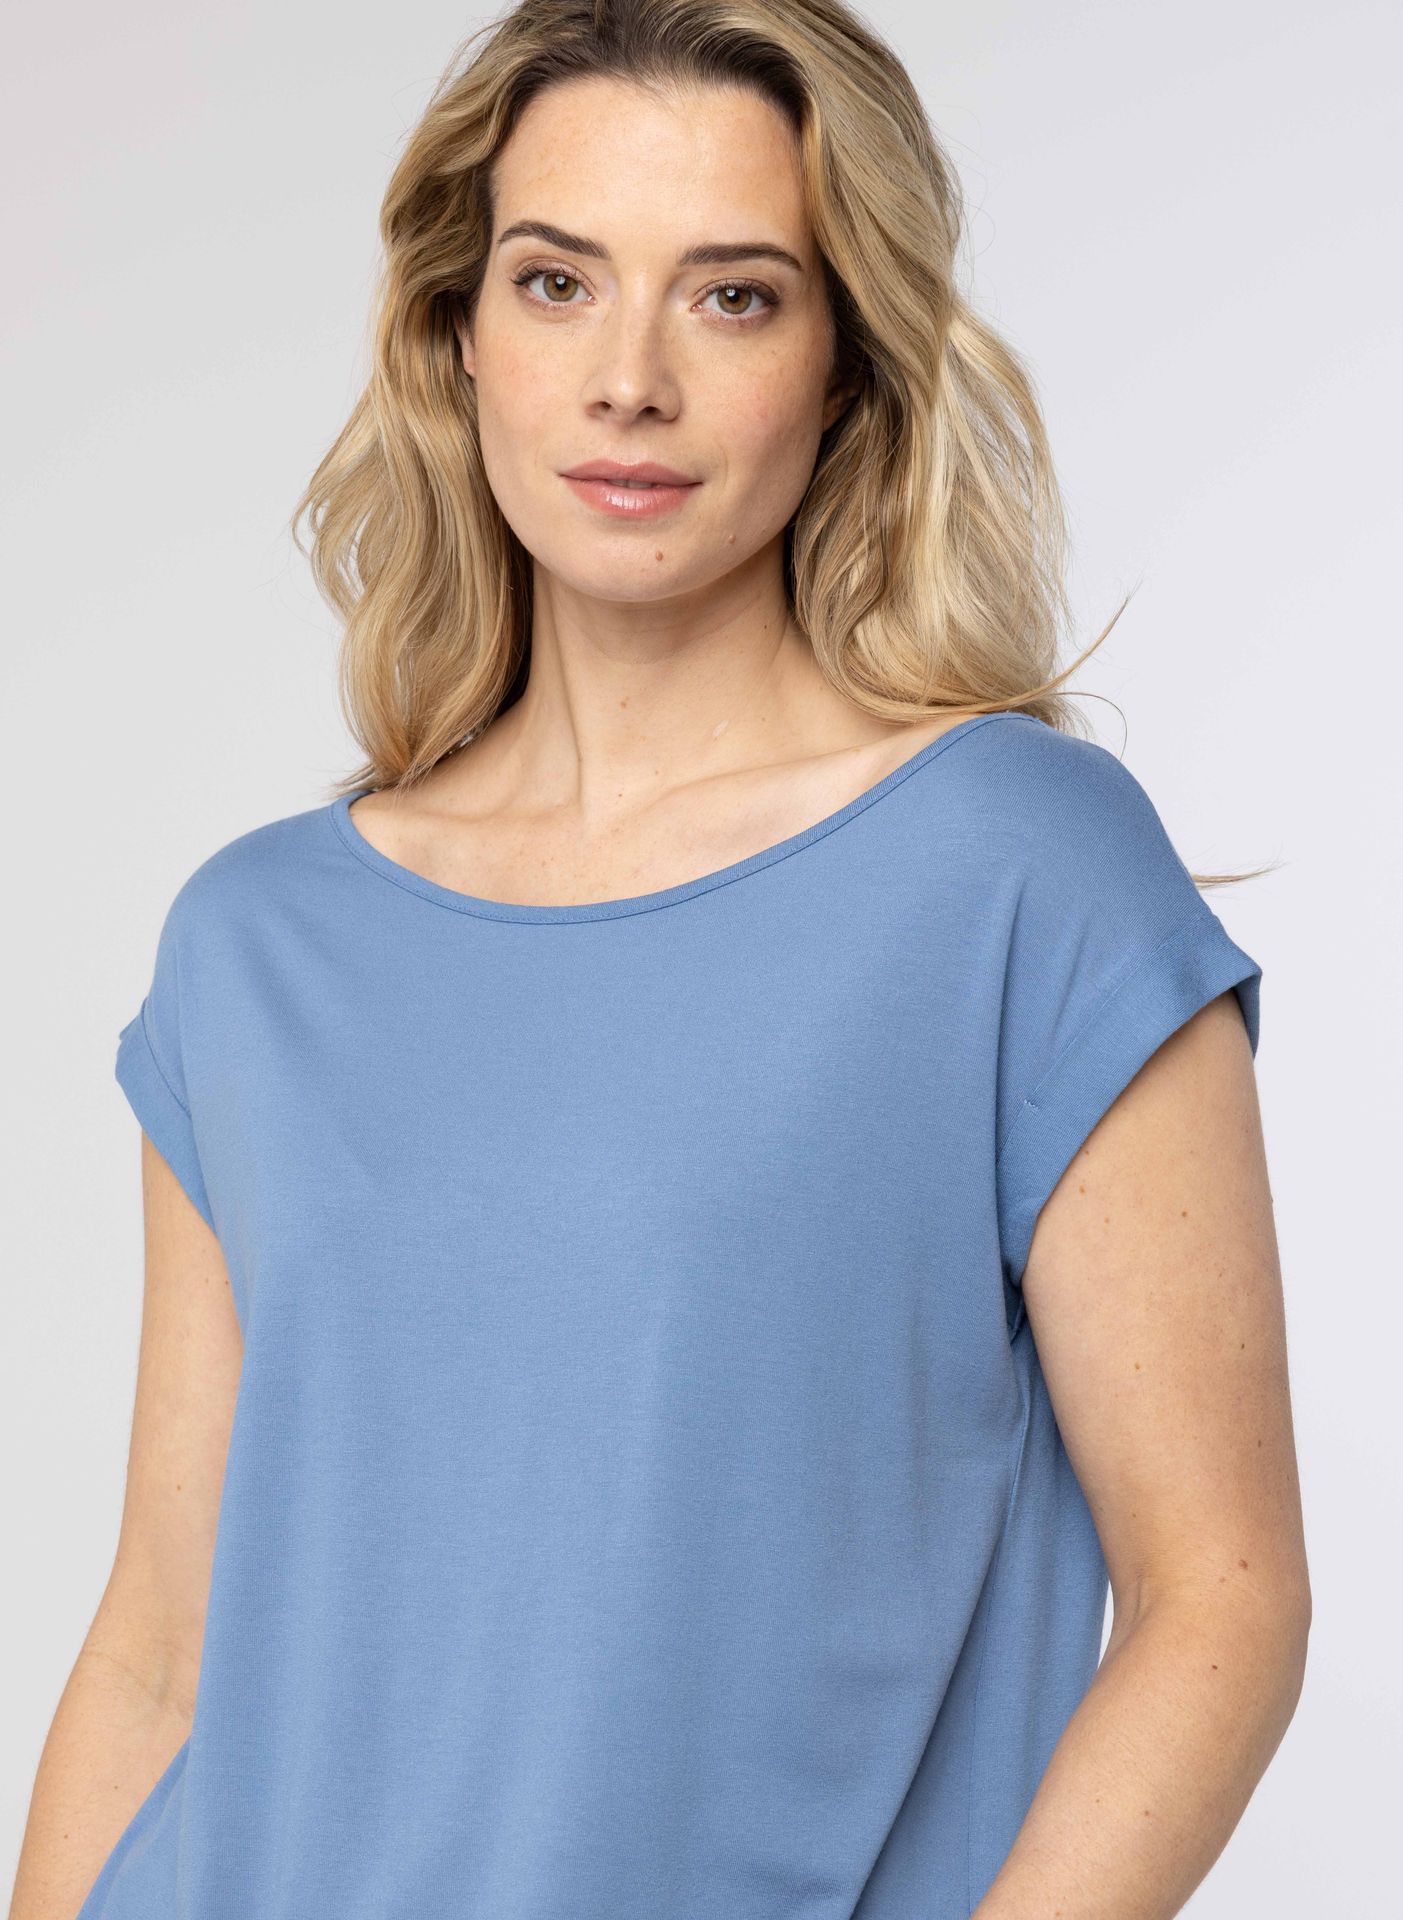 Norah Shirt Marije lichtblauw denim blue 203656-472